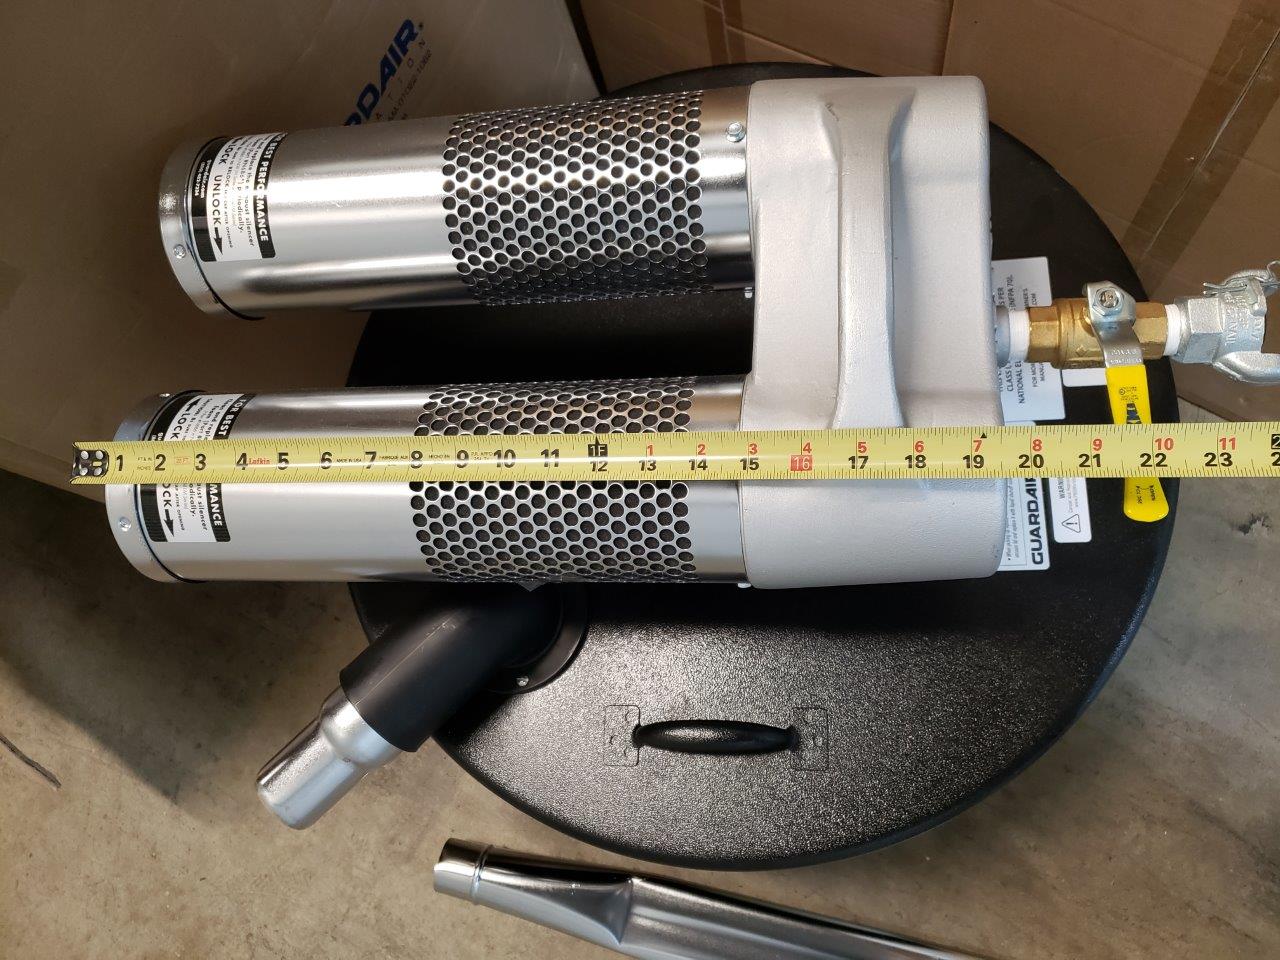 Guardair Pneumatic Vacuum Generating Head N552BK for Top of 55 Gallon Drum, Dual B Venturi, 2 inch Inlet and Attachment Kit like nortech tornado